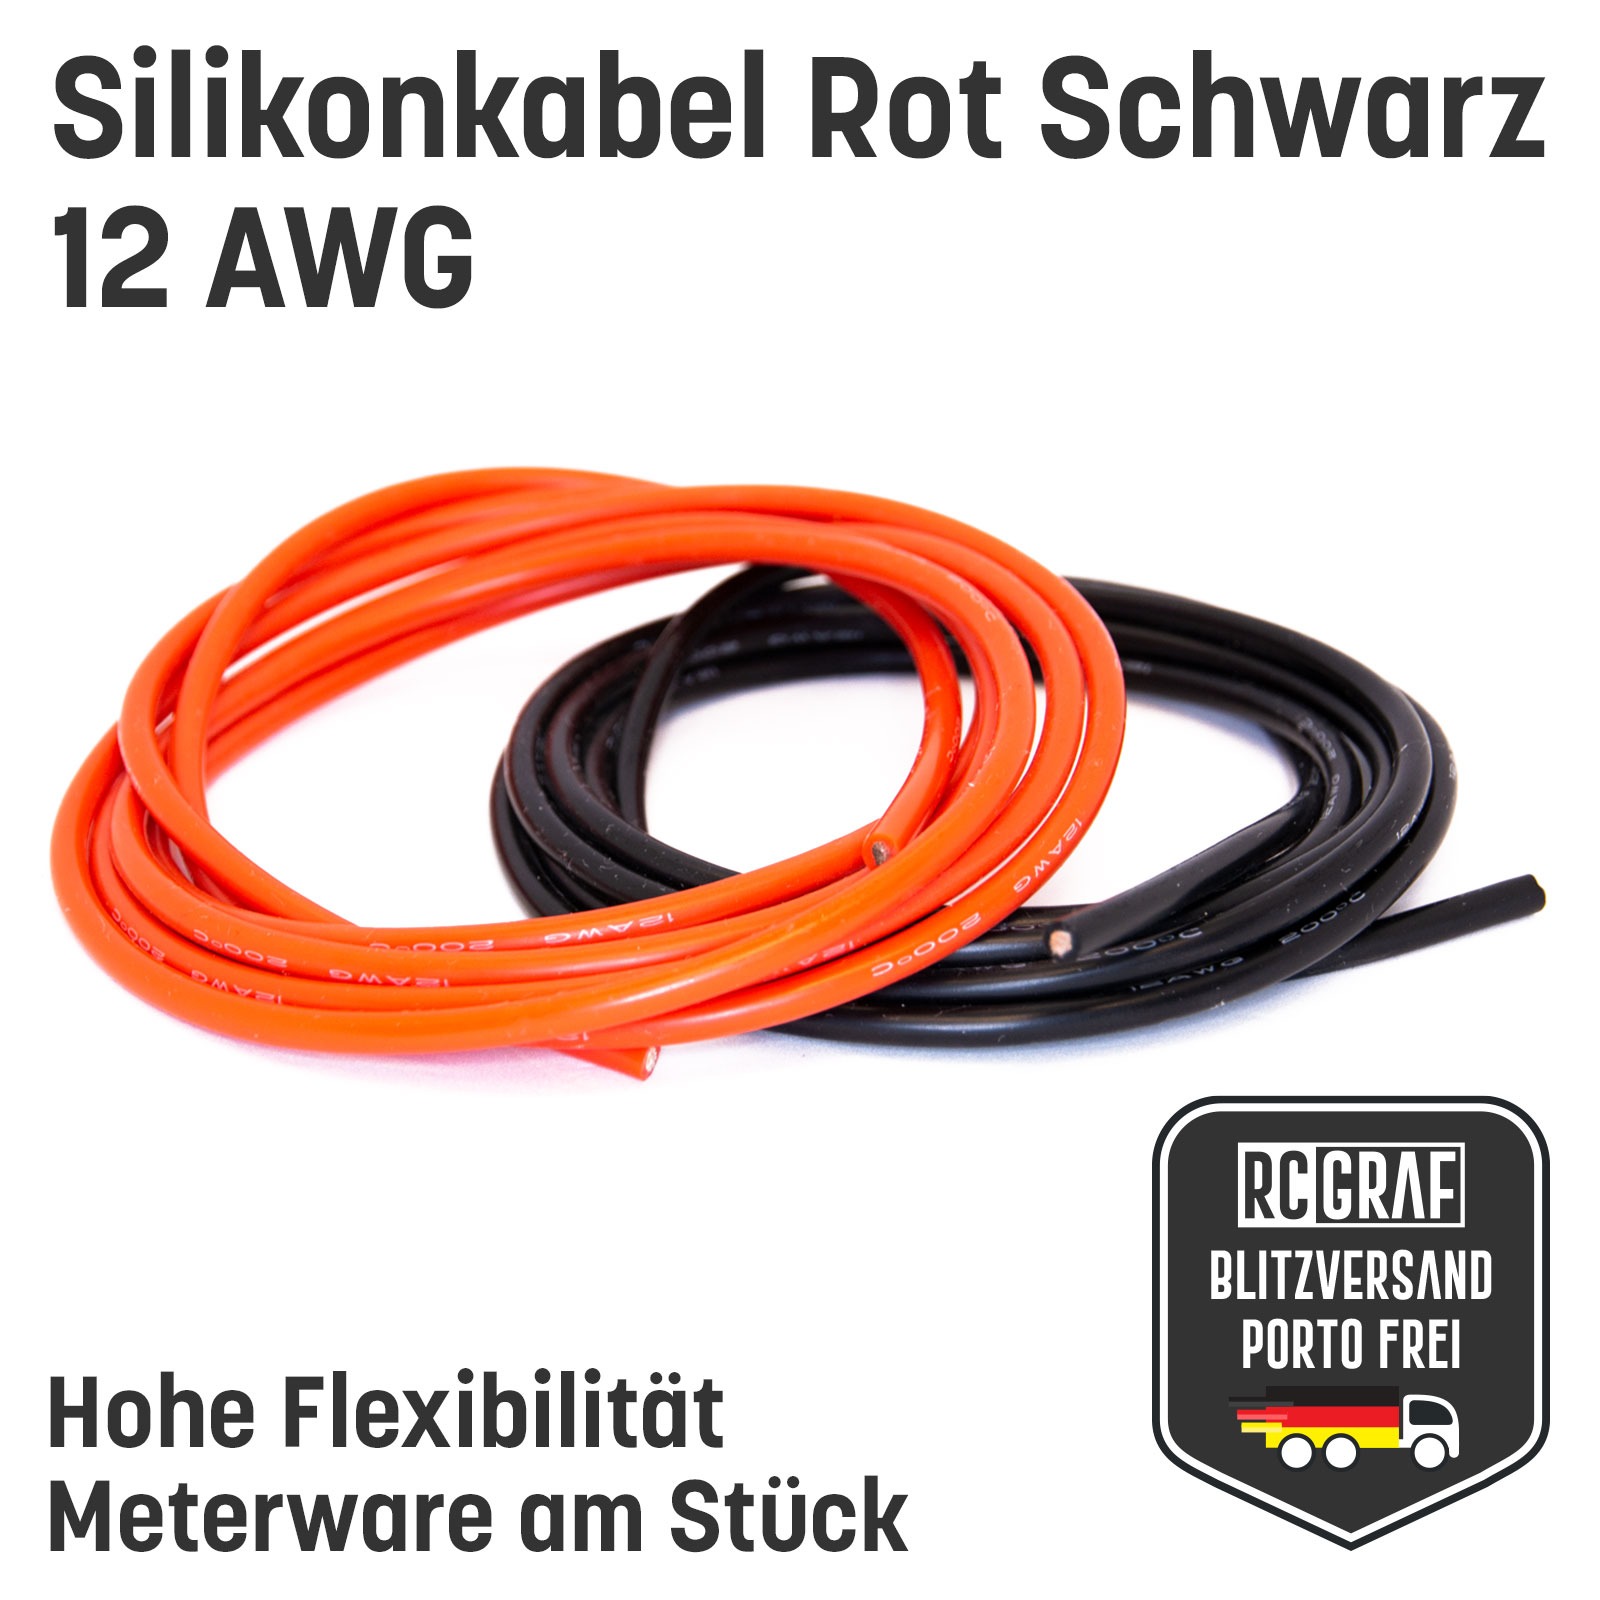 Silikonkabel 12 AWG hochflexibel Rot Schwarz Kupfer RC Kabel